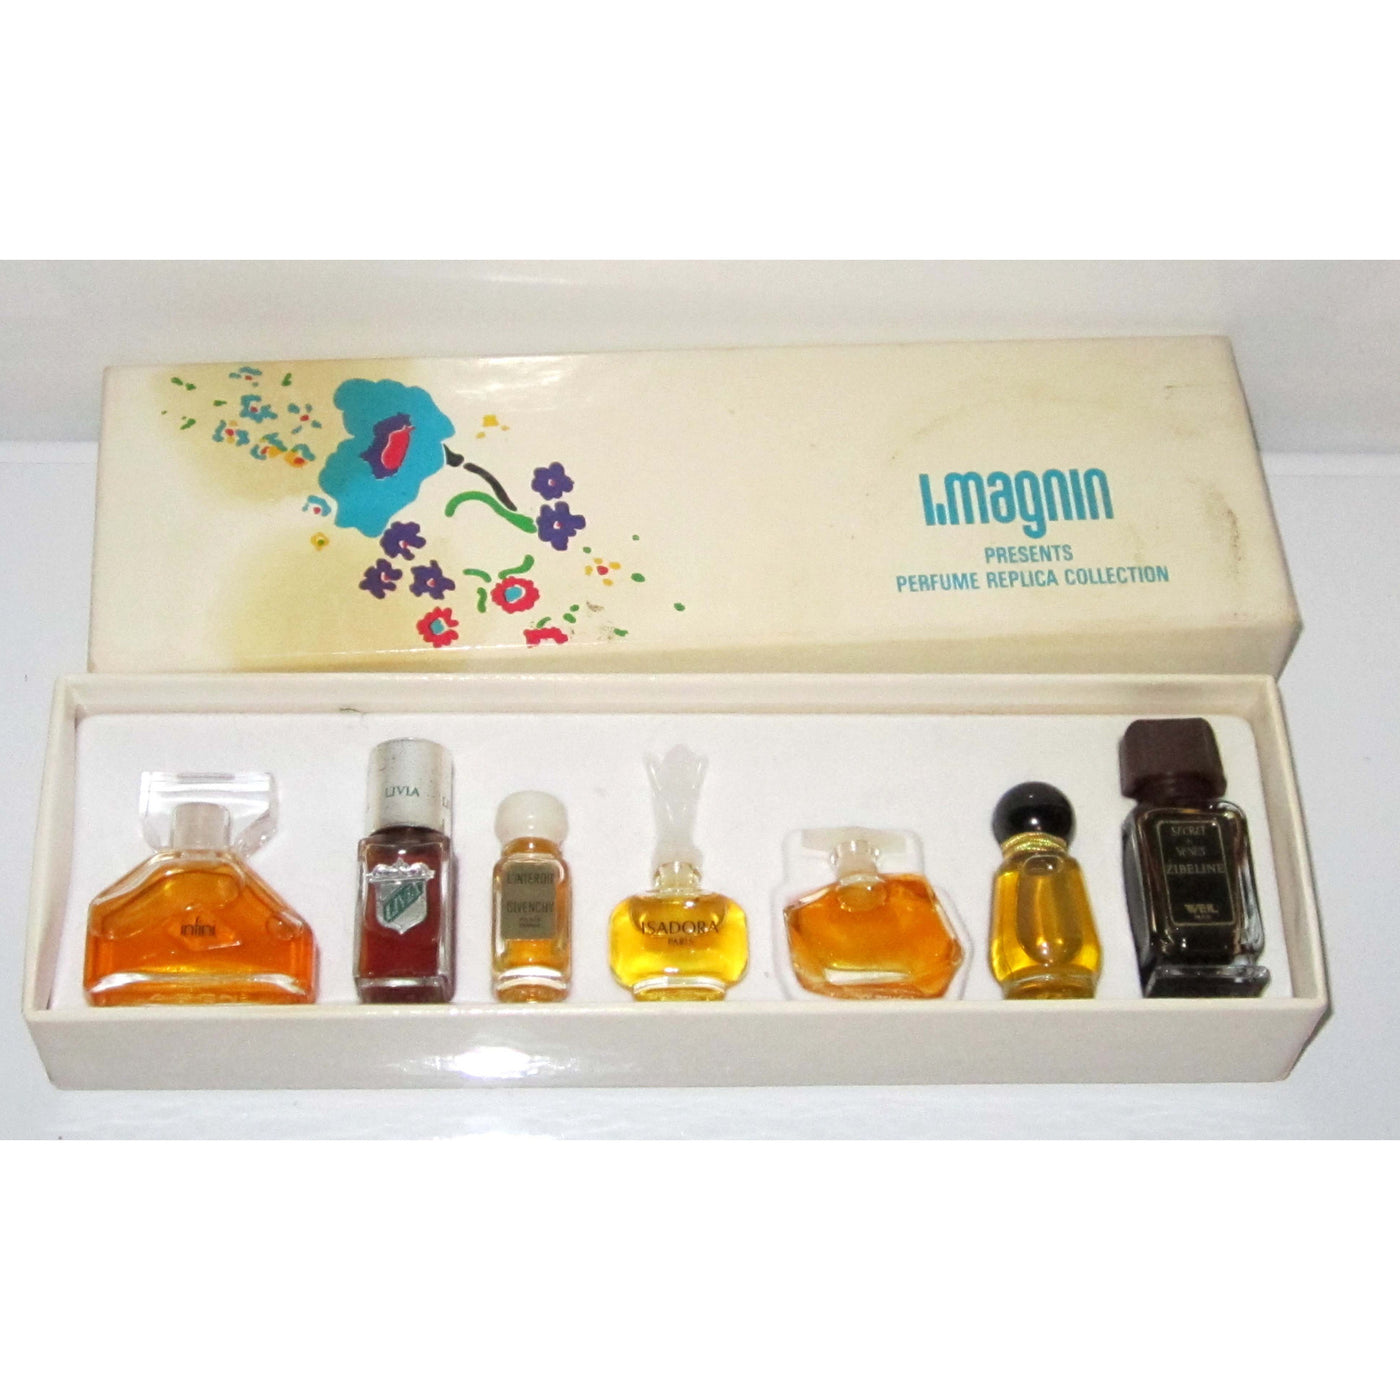 Vintage I. Magnin Perfume Replica Collection